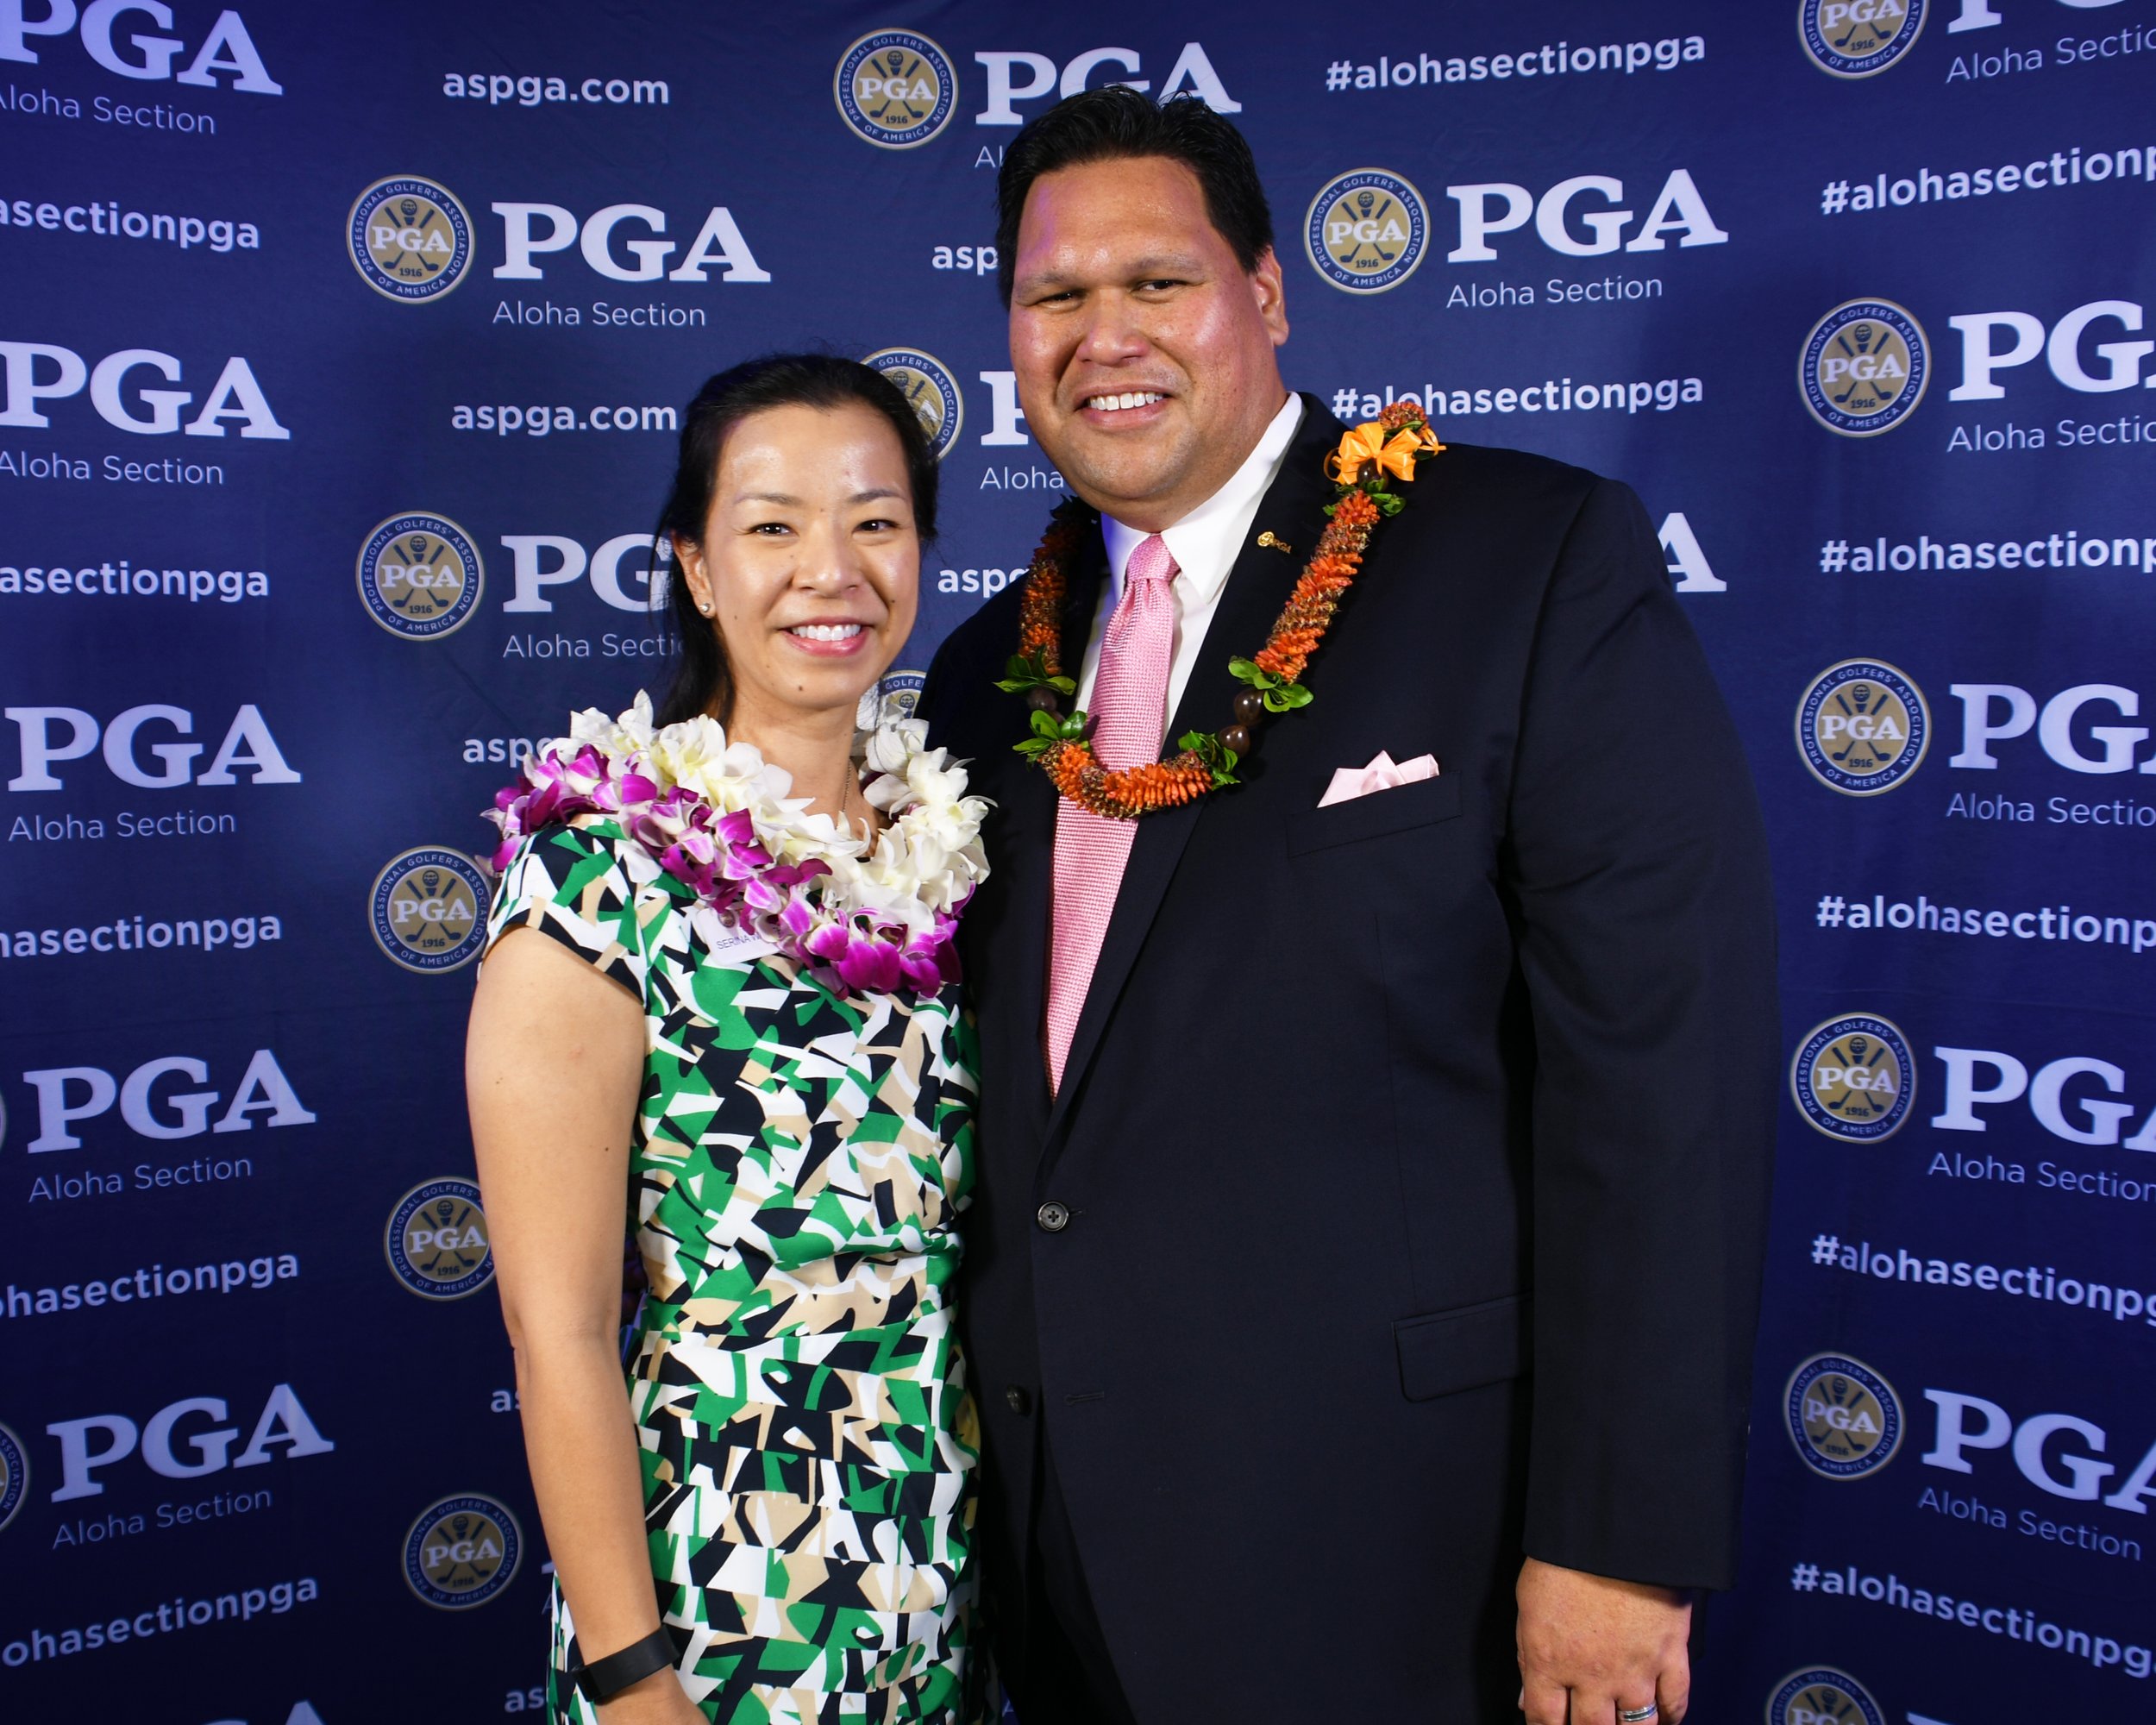  Wes Wailehua and wife Serina at the PGA Awards dinner.  Photos courtesy Wes Wailehua  